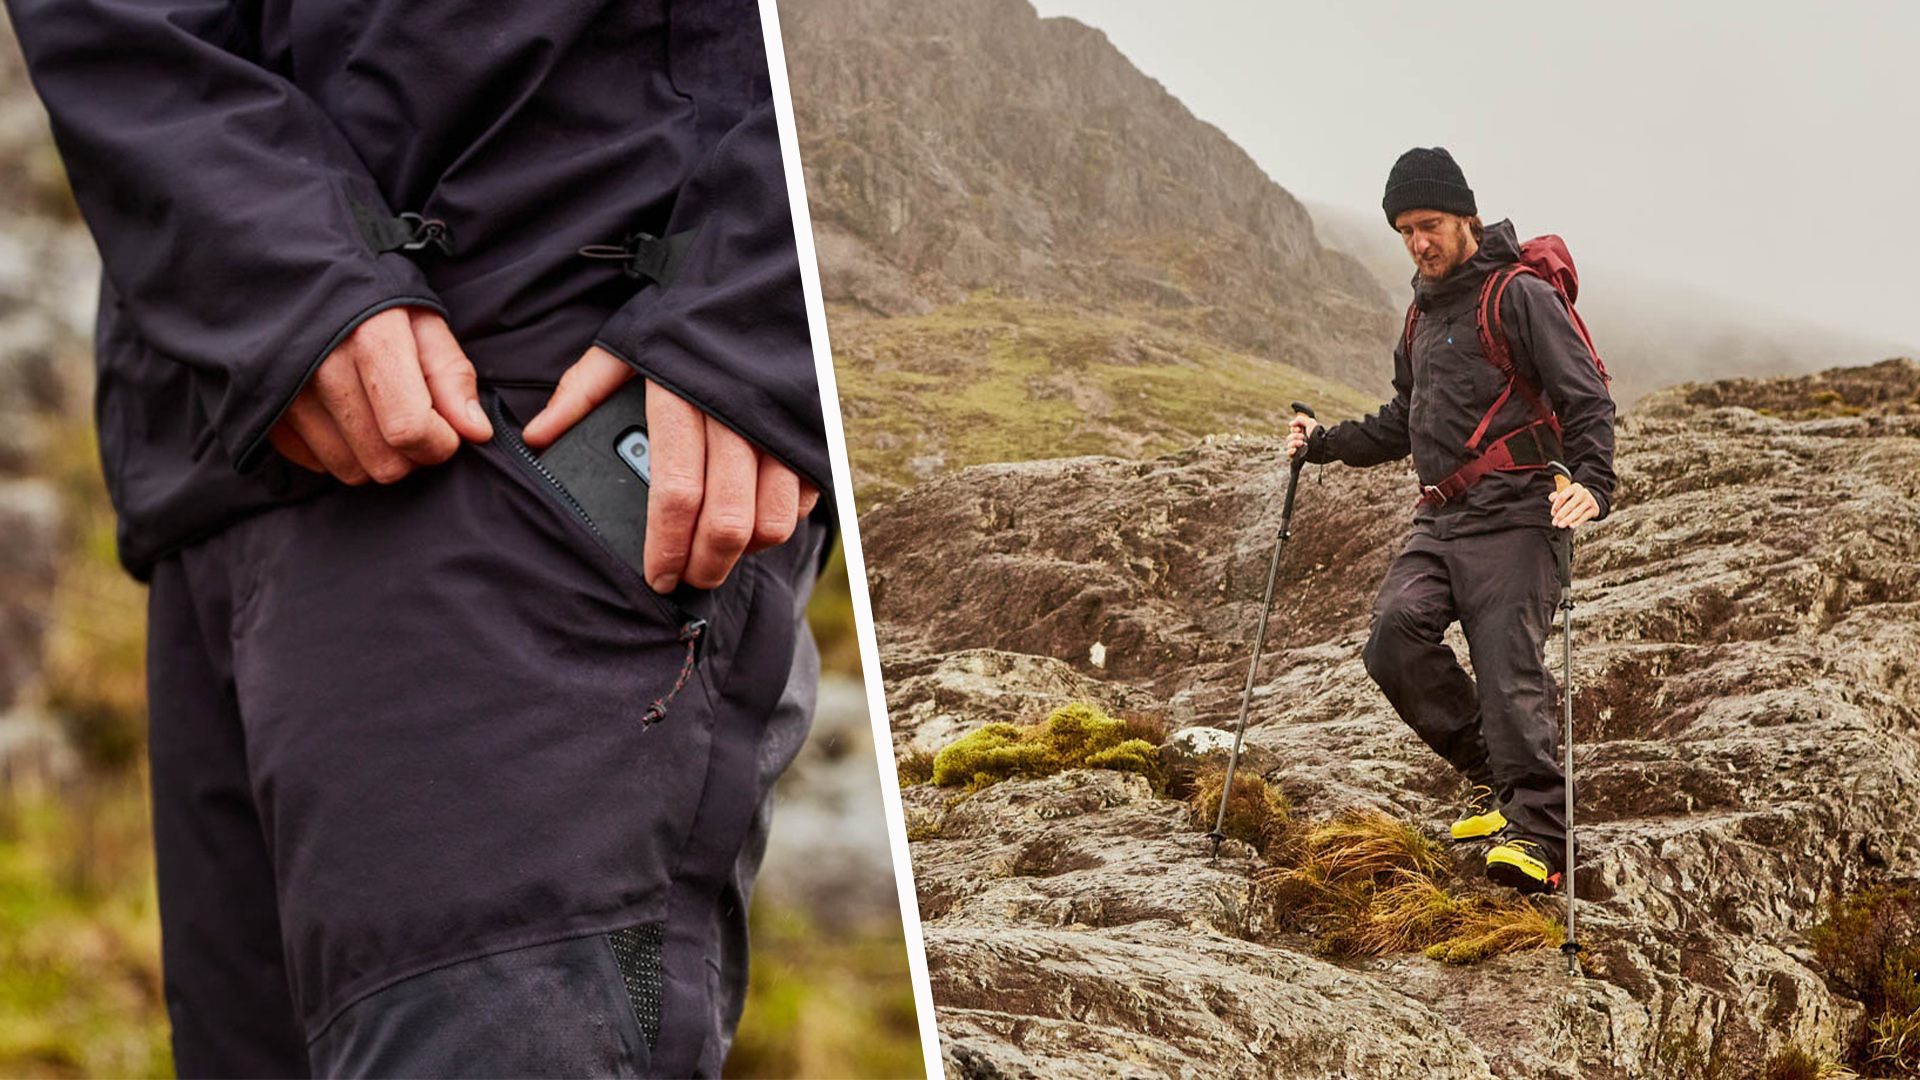 Womens Durable Mountain Trekking Trousers Bottoms Pants - Mt500 Forclaz